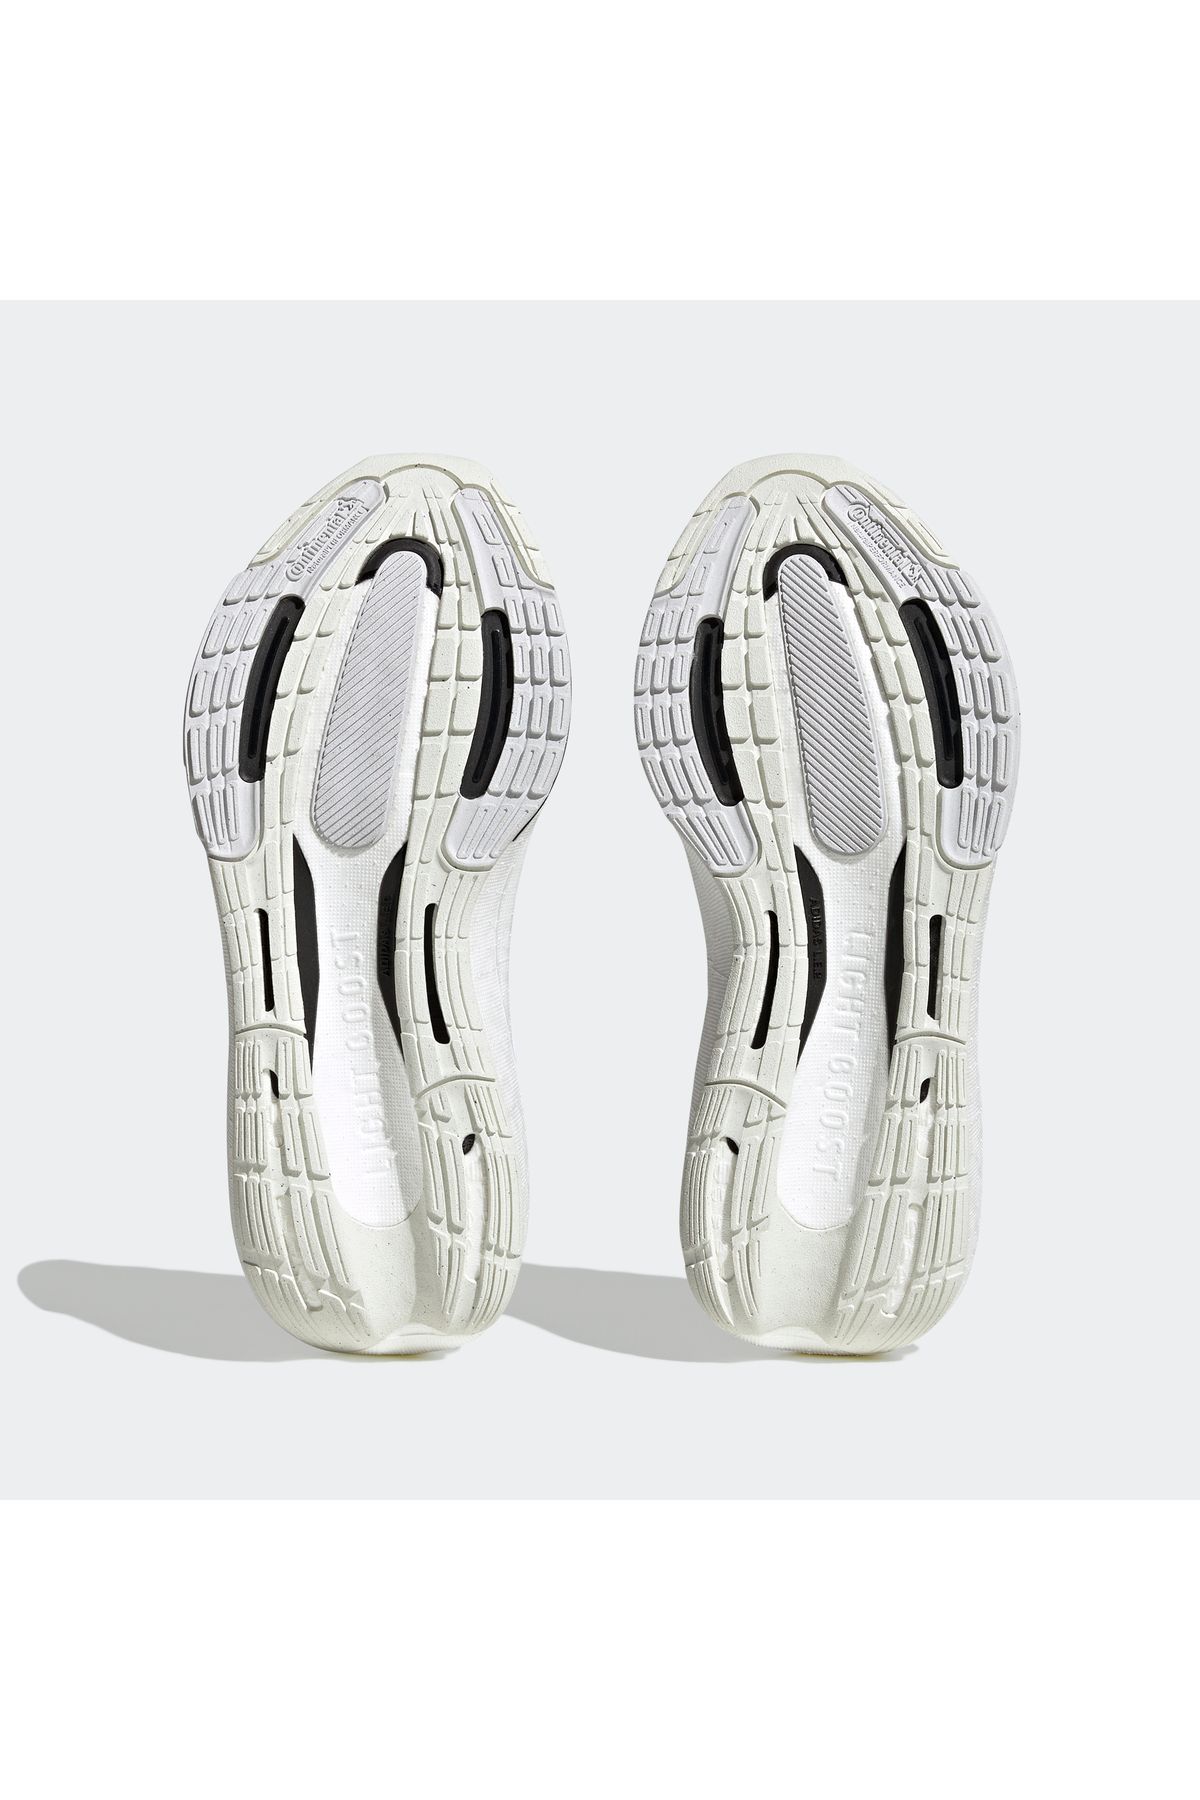 adidas کفش کتانی زنانه ورزشی مدل asmc UB 23 lower footprint